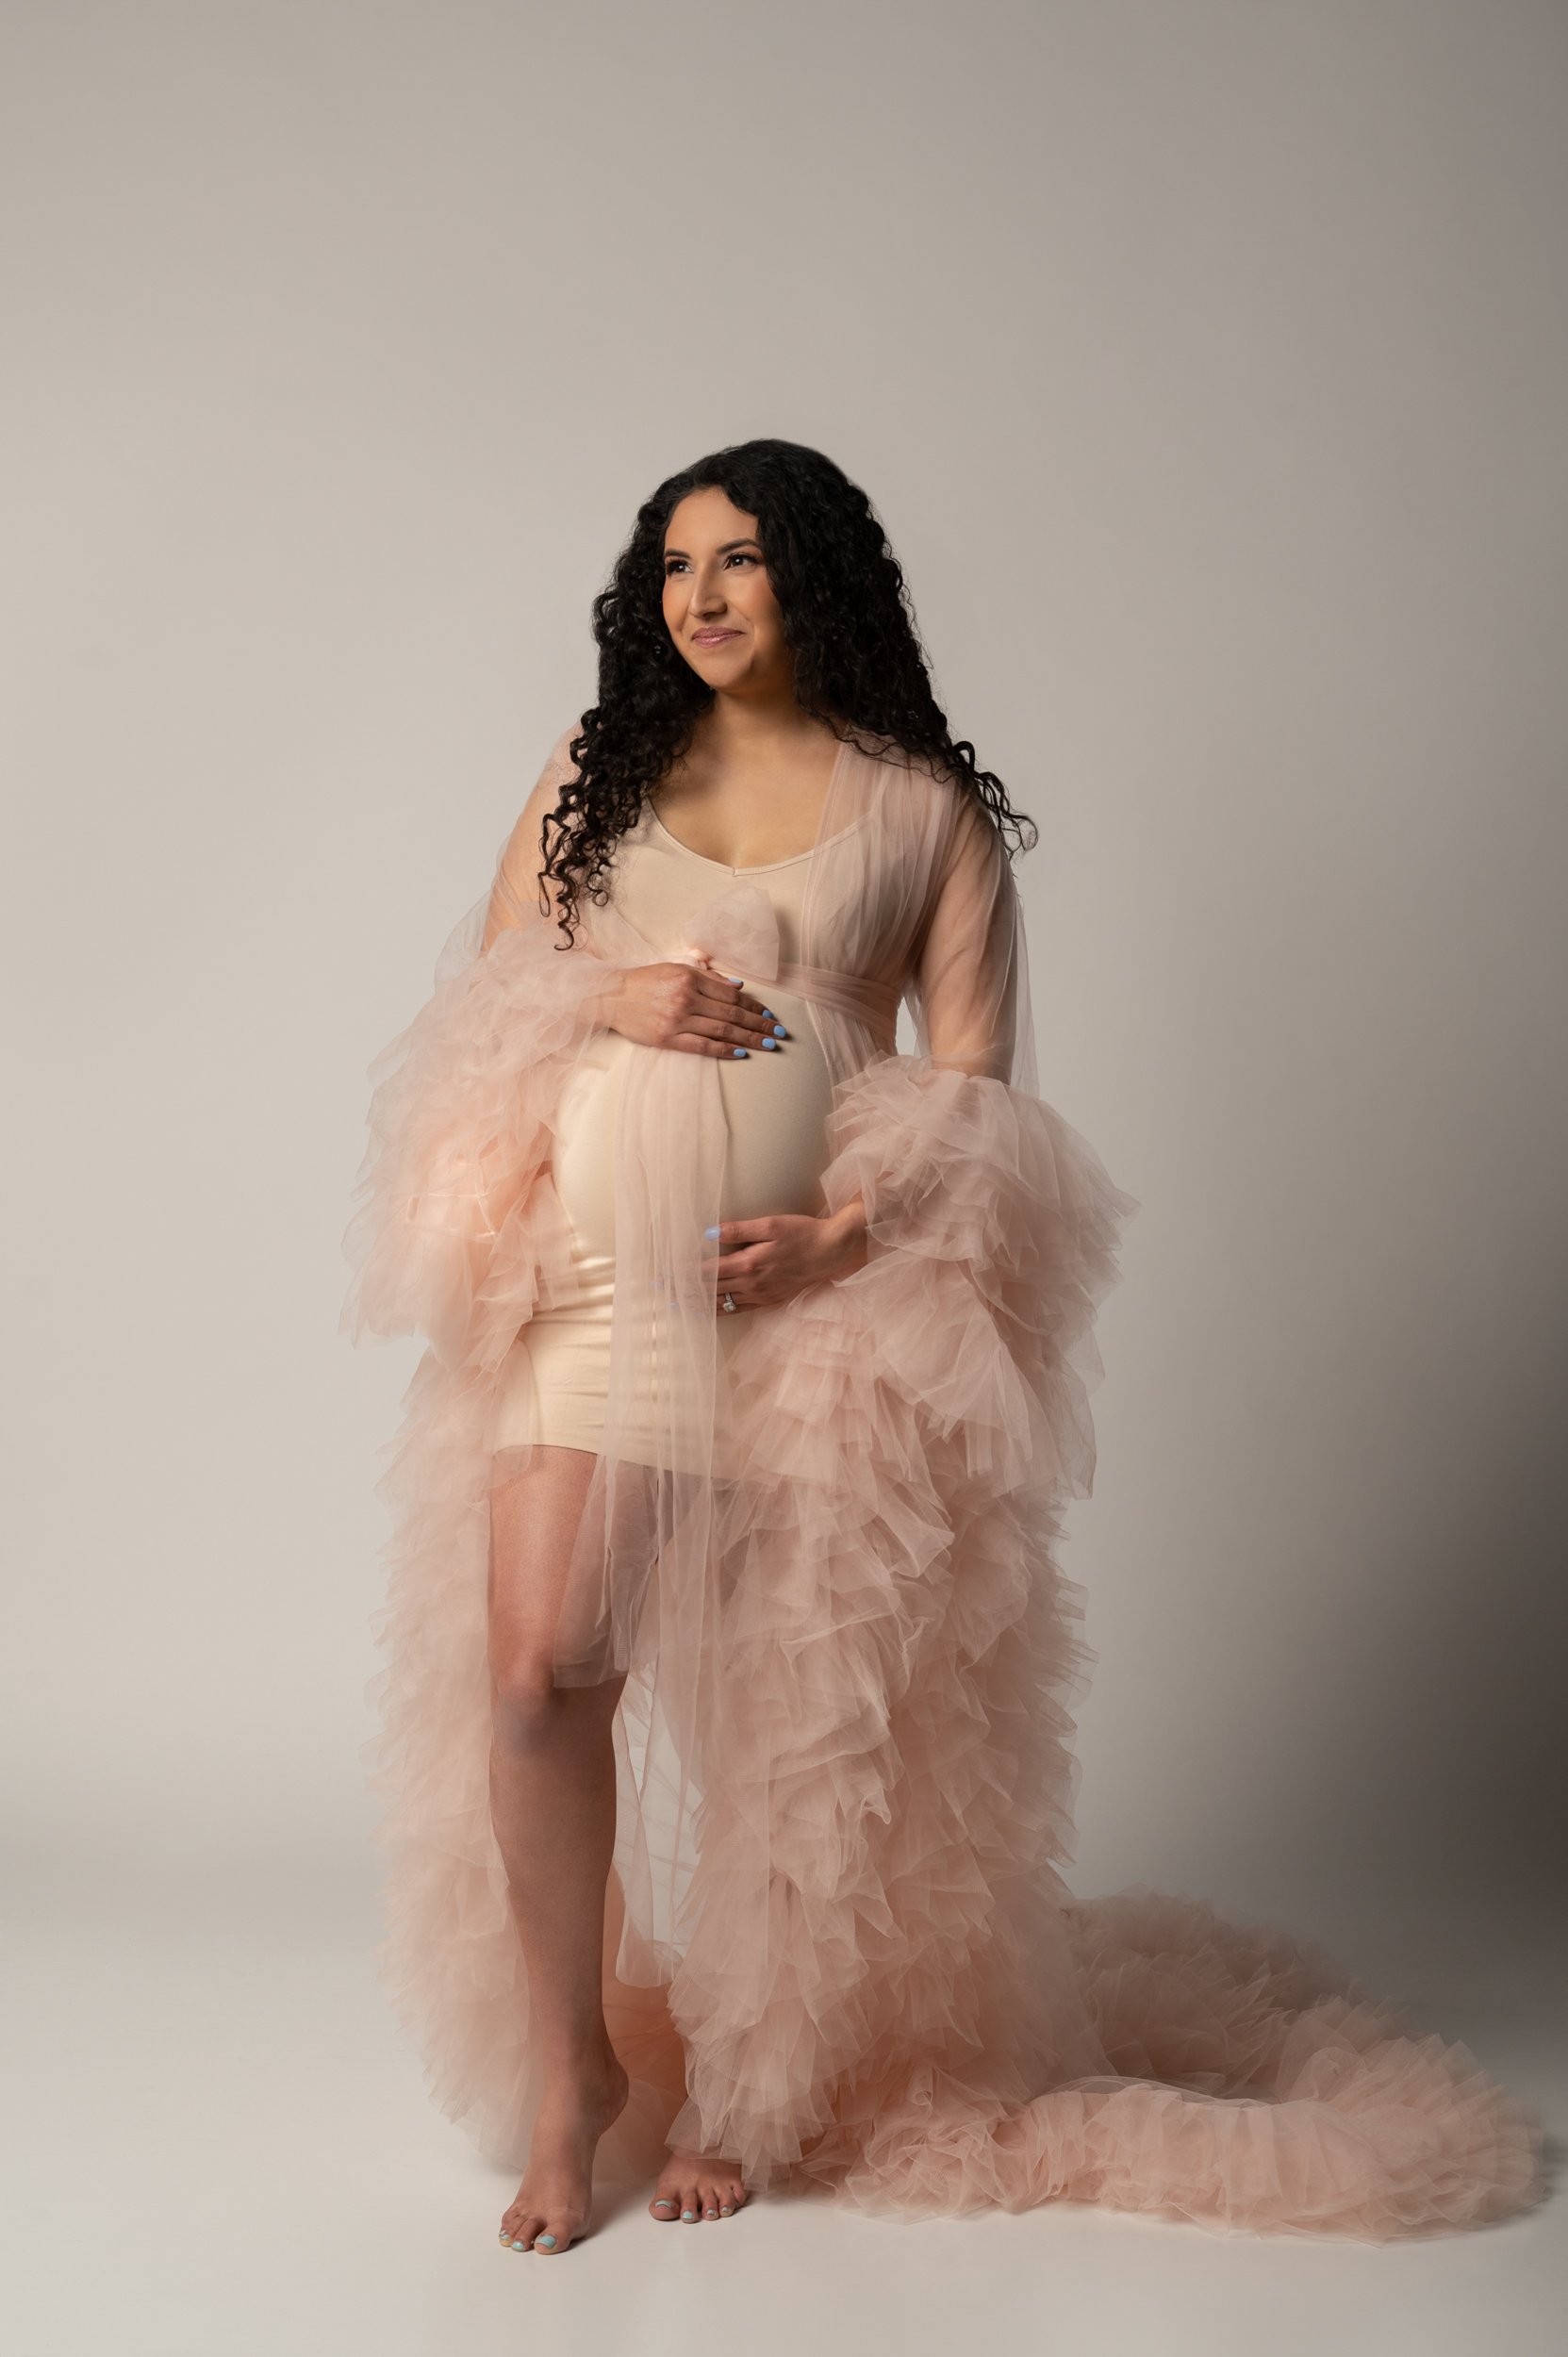 Top 5 Maternity Photoshoot Outfit Ideas For 2023 — Lauren Scott Studios